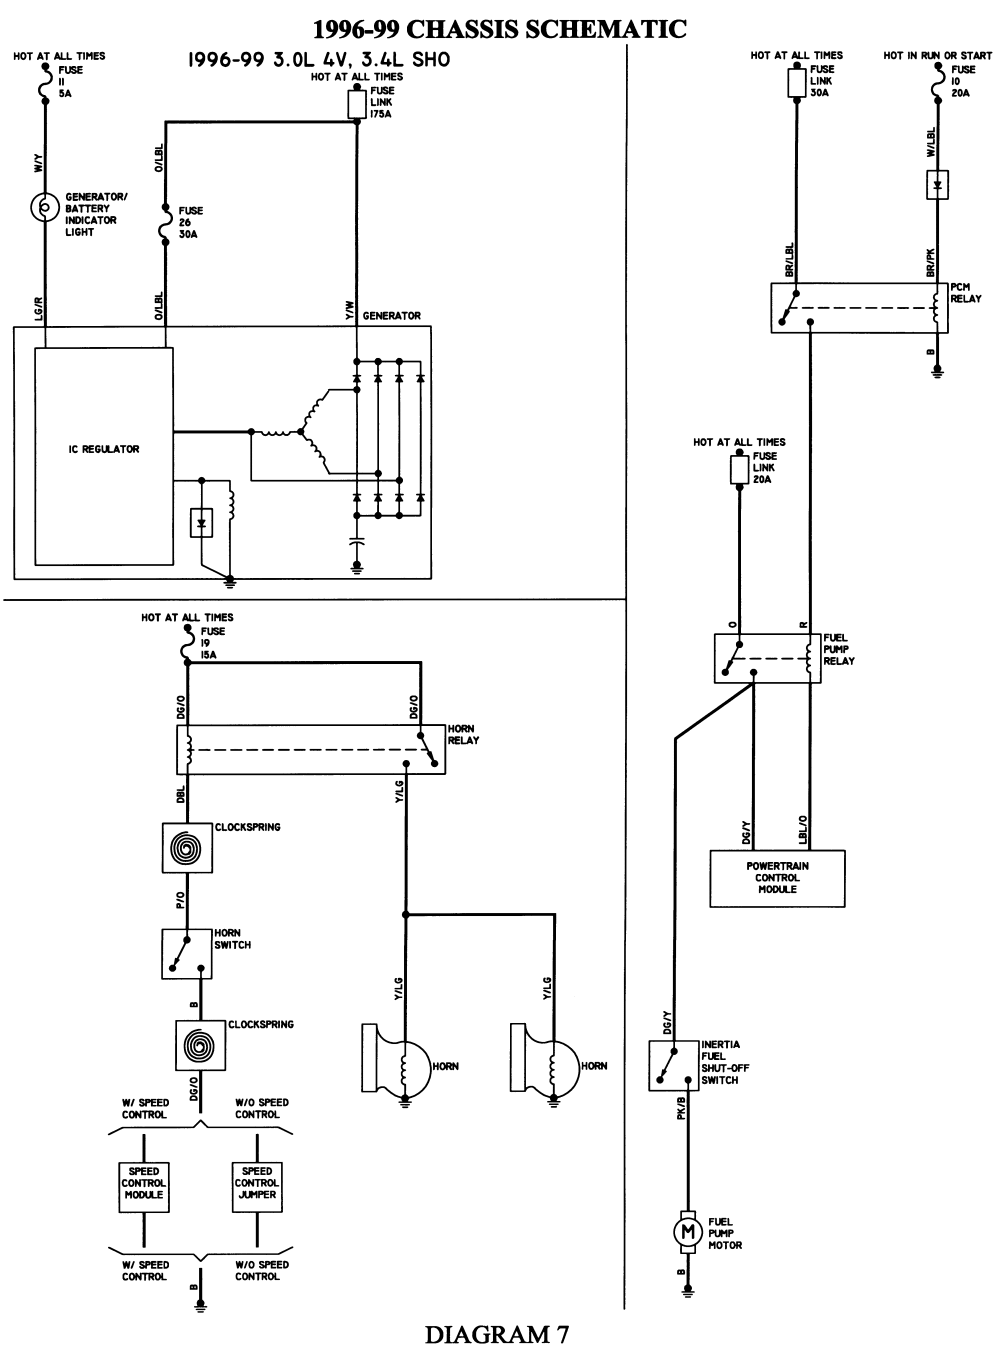 1994 Honda Civic Fuel Pump Wiring Diagram